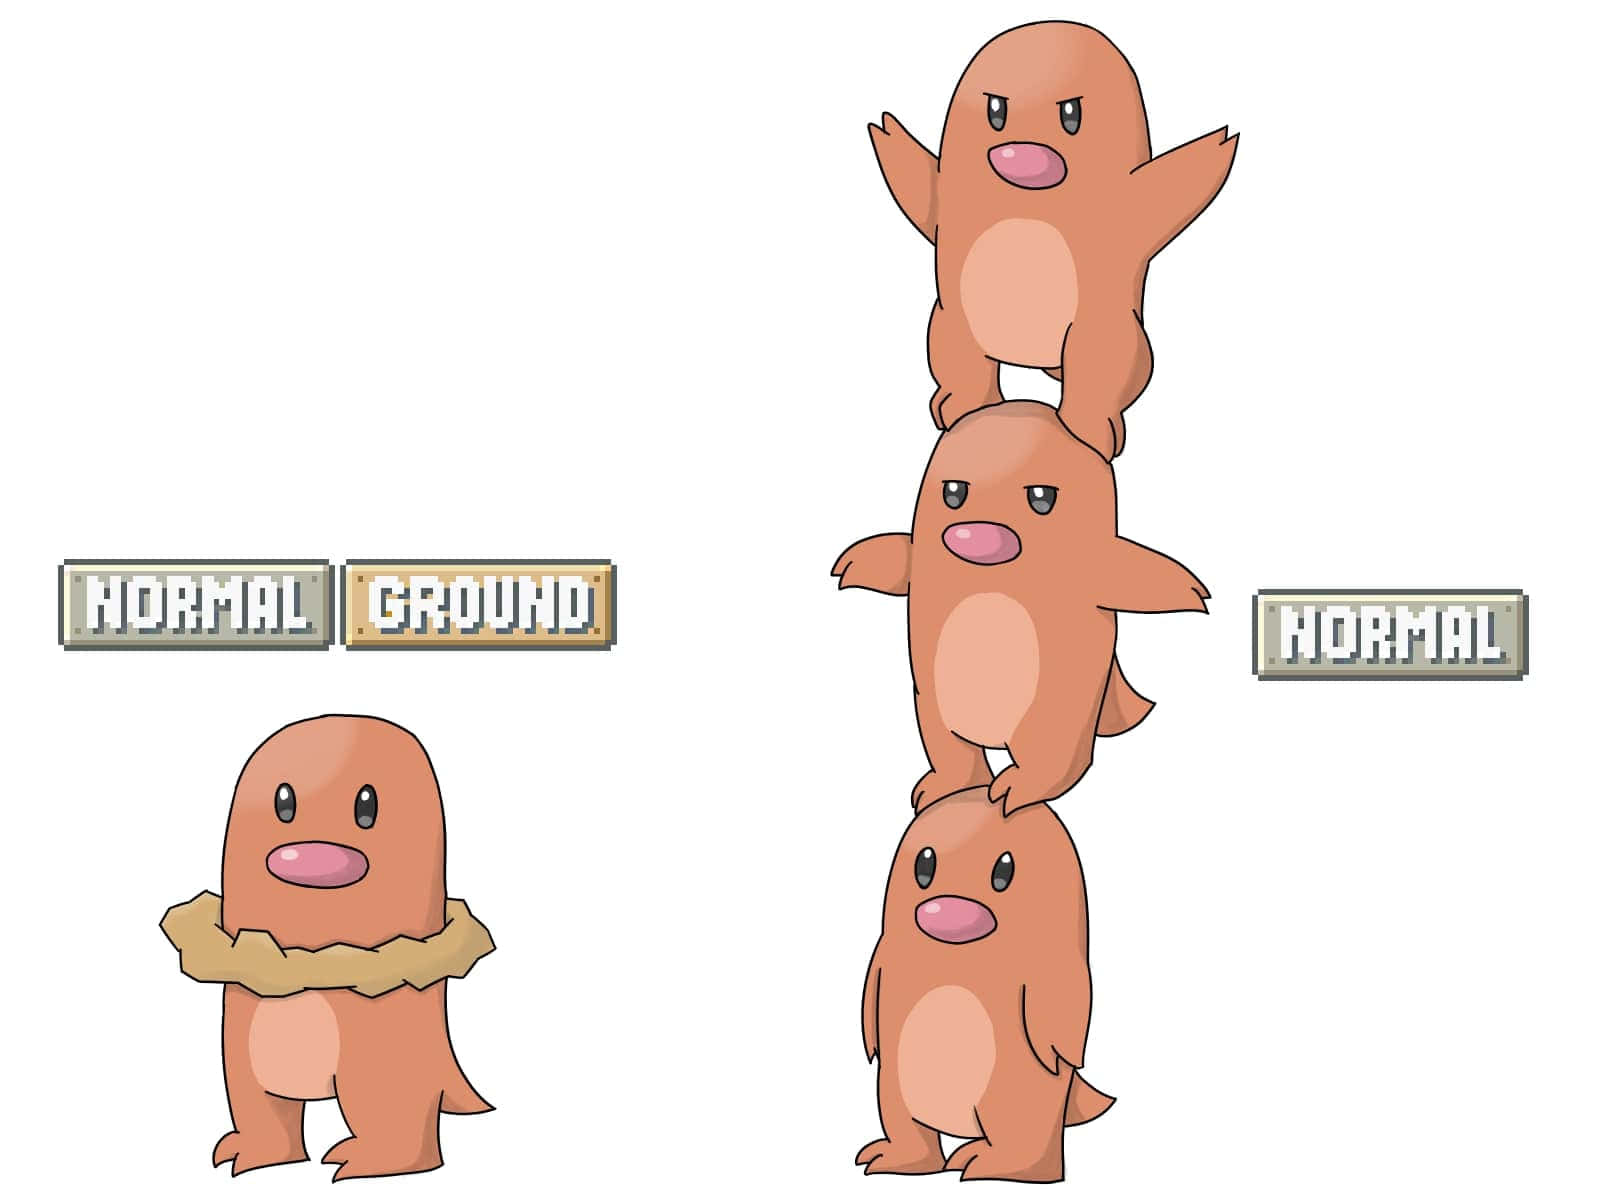 pokemon dugtrio evolution chart